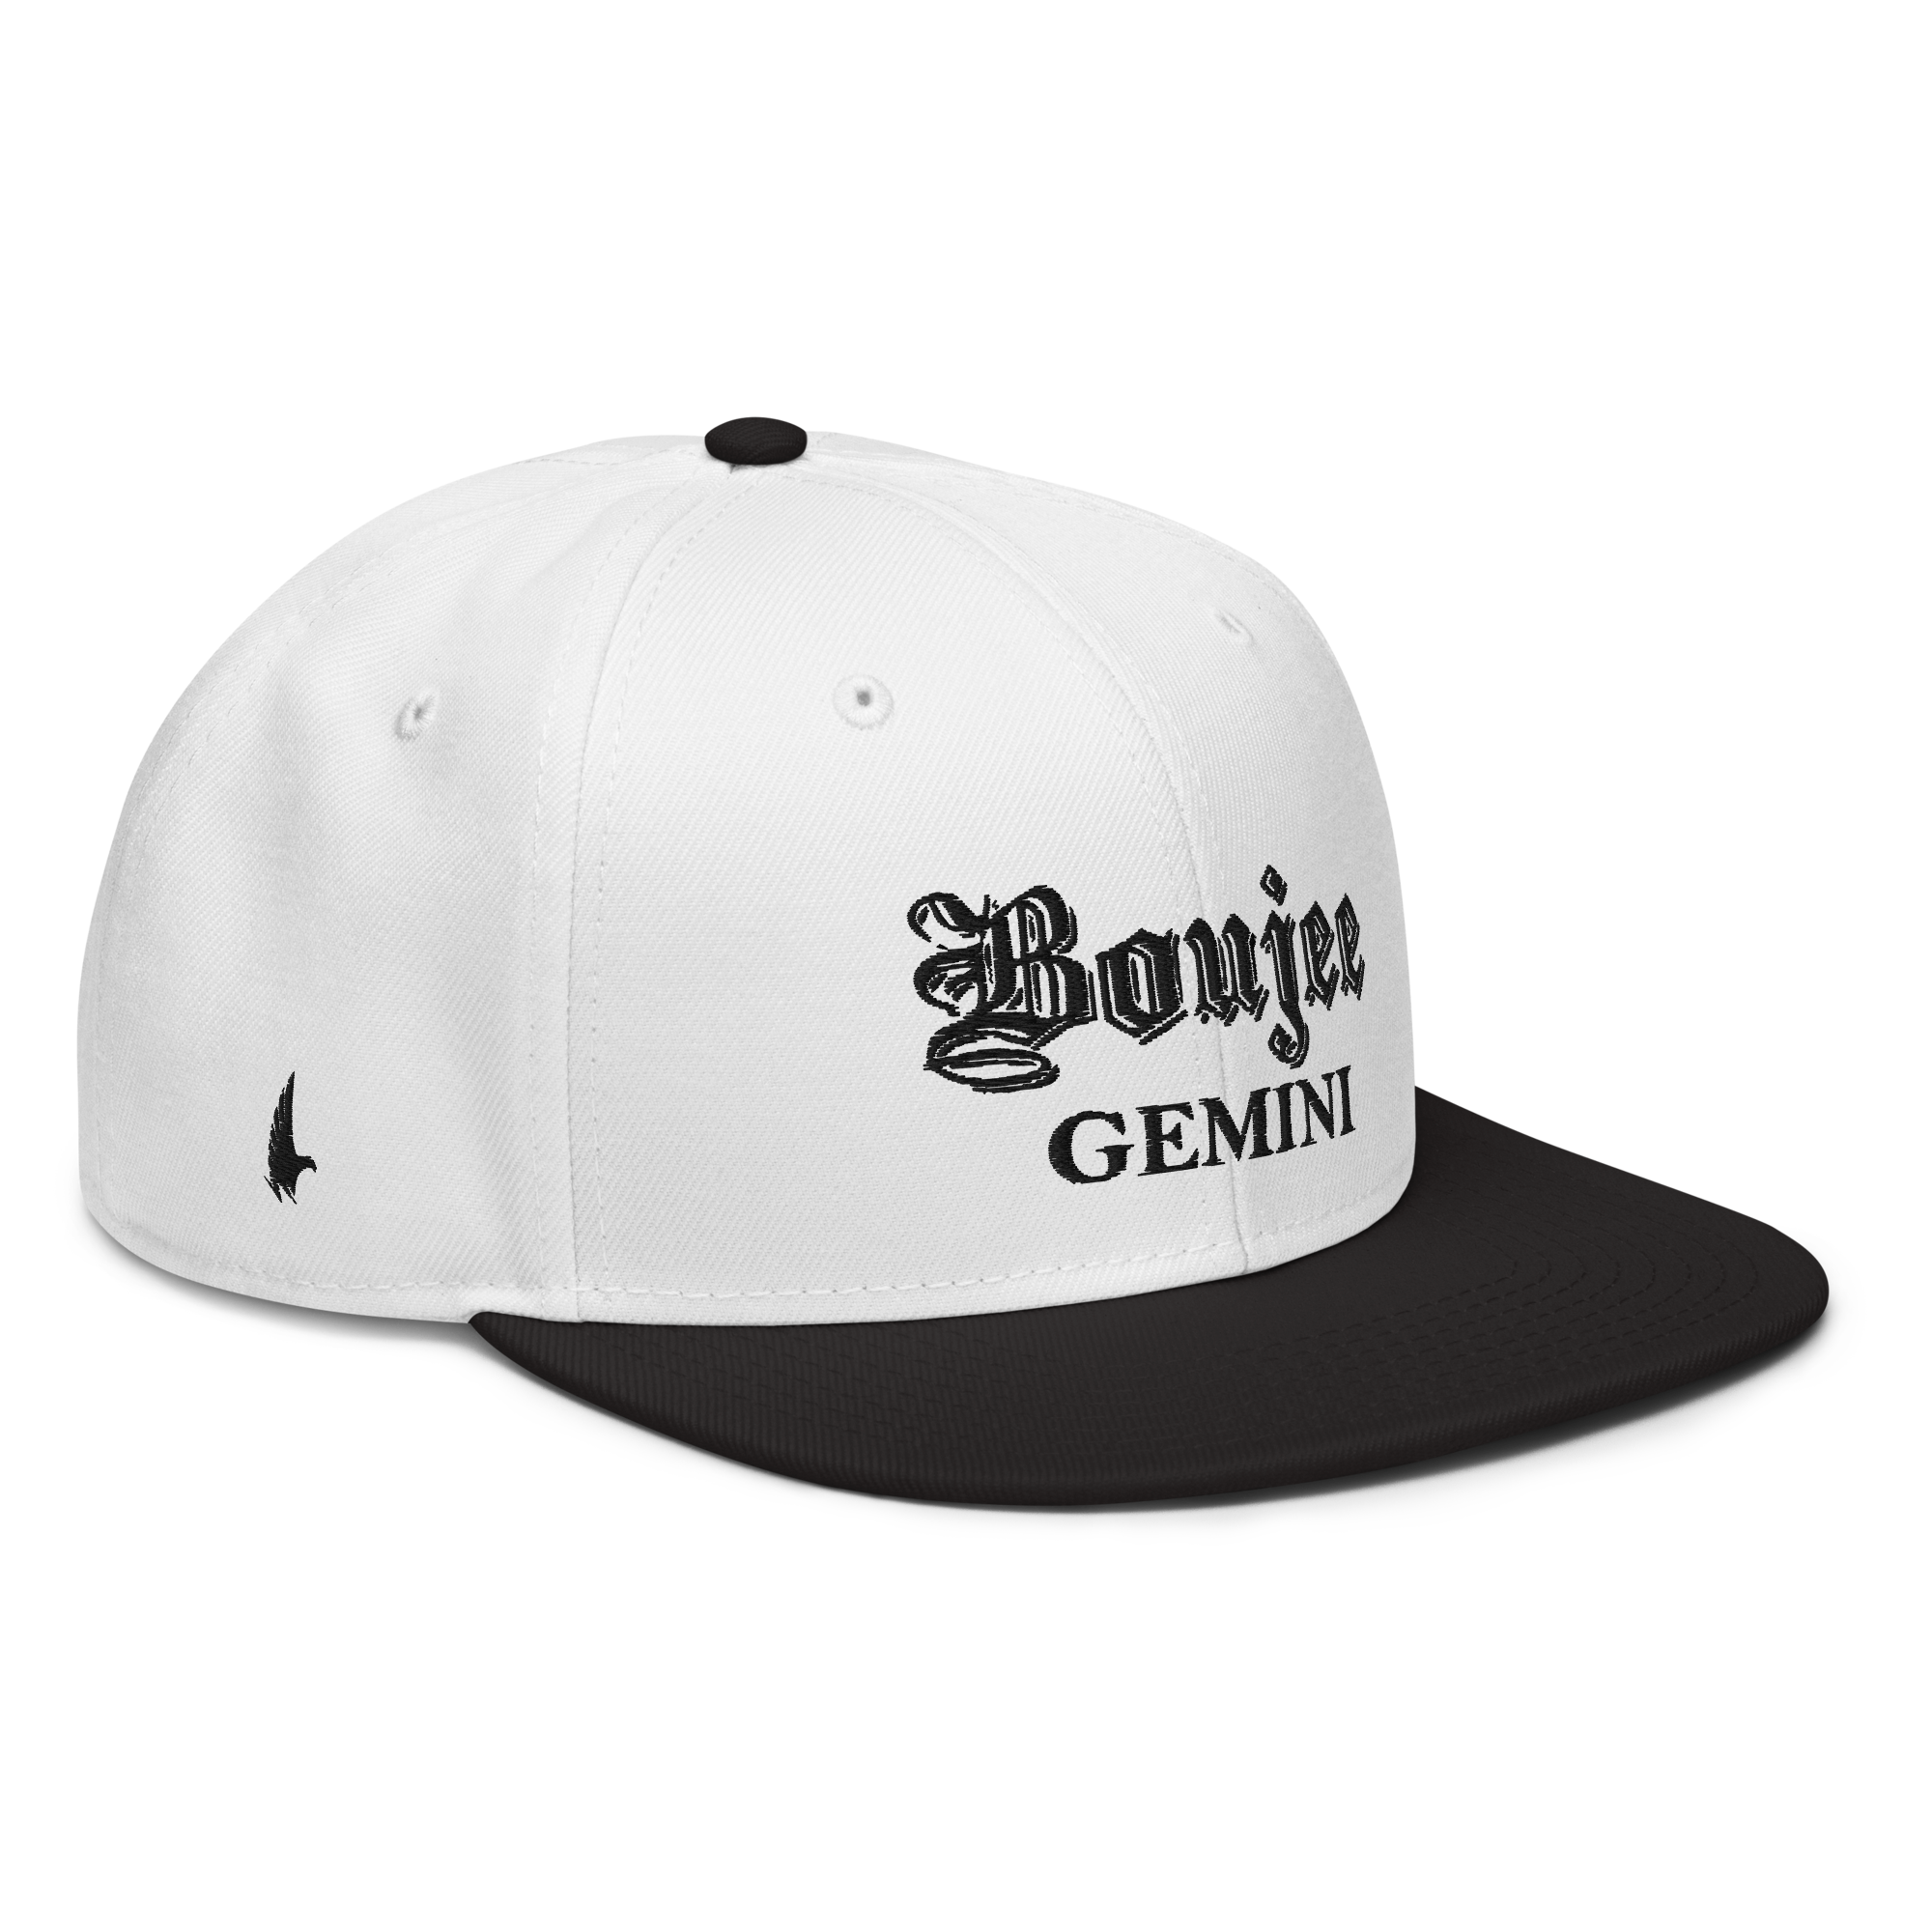 Boujee Gemini Snapback Hat - White/Black/Black - Loyalty Vibes